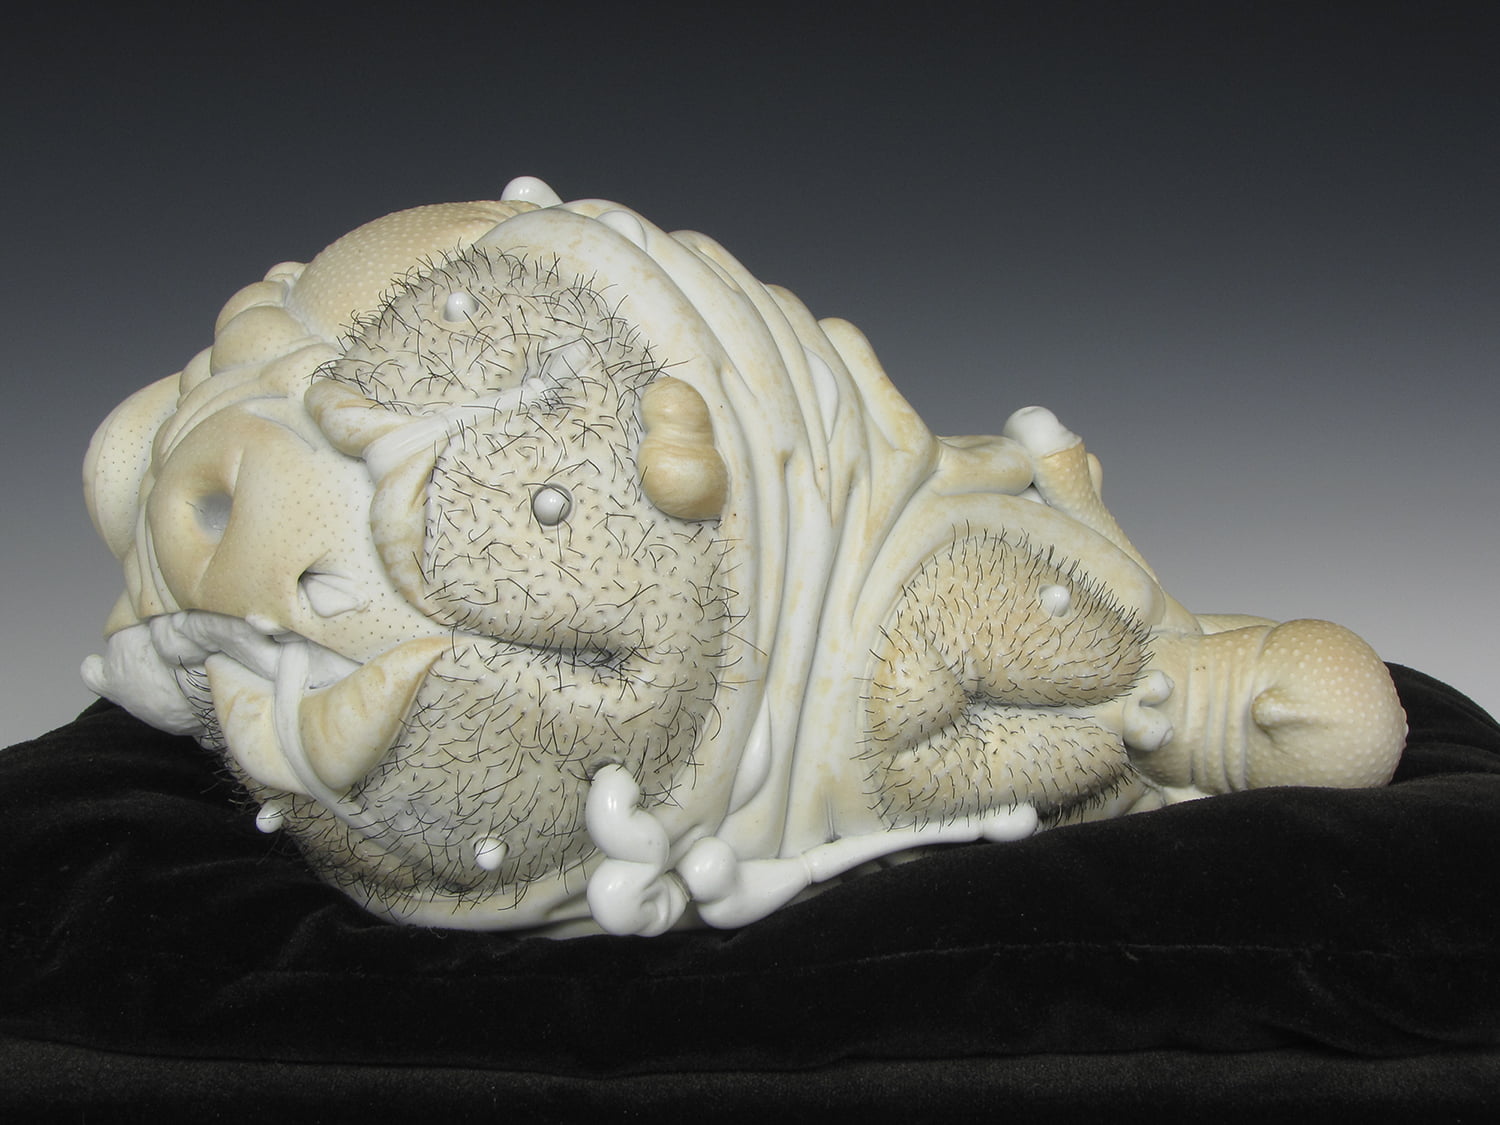 Jason Briggs "Blonde" (alternate view). Porcelain and mixed media sculptural ceramic art.